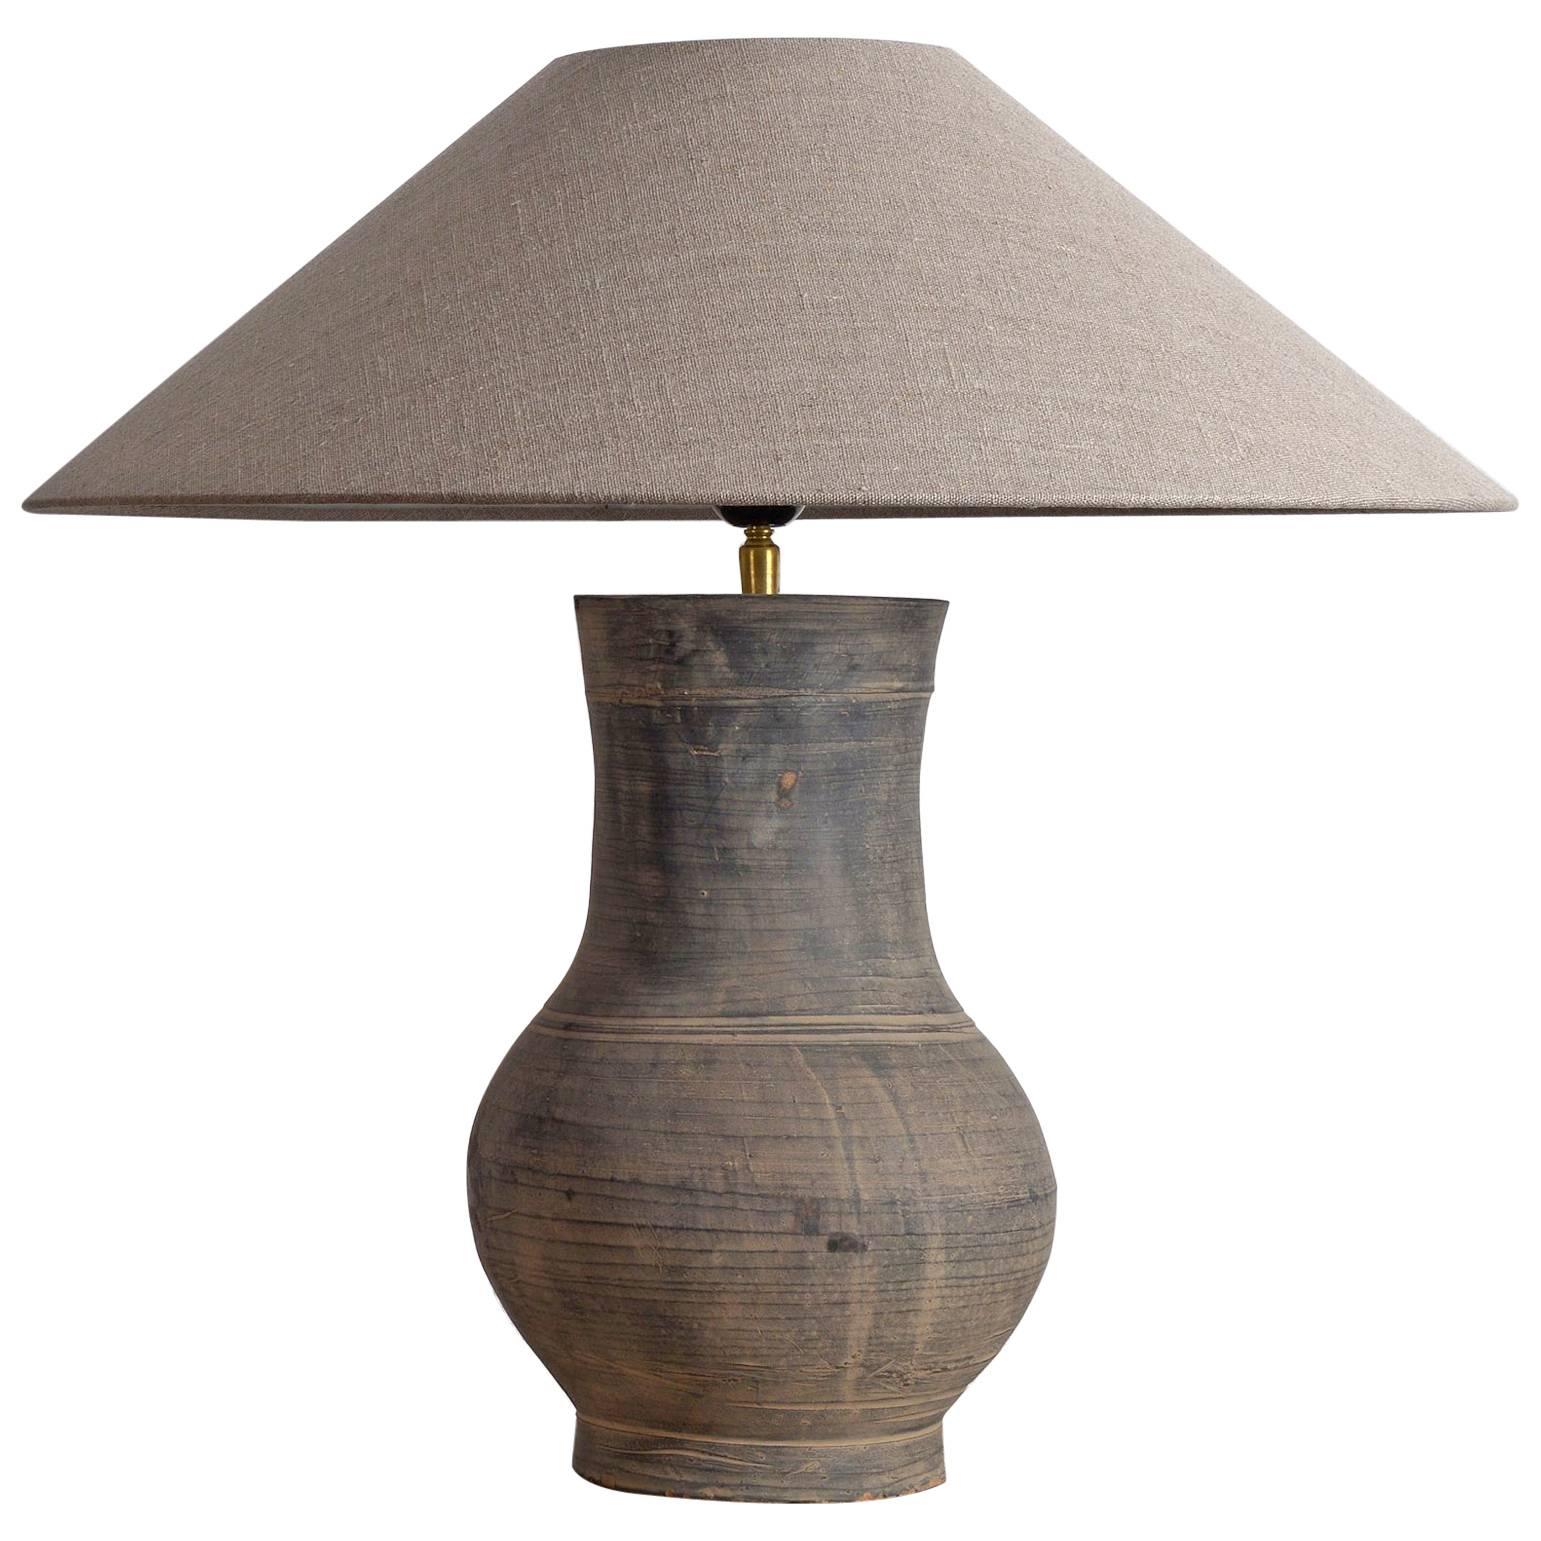 Chinese Han Lamp with Handmade Belgian Linen Shade